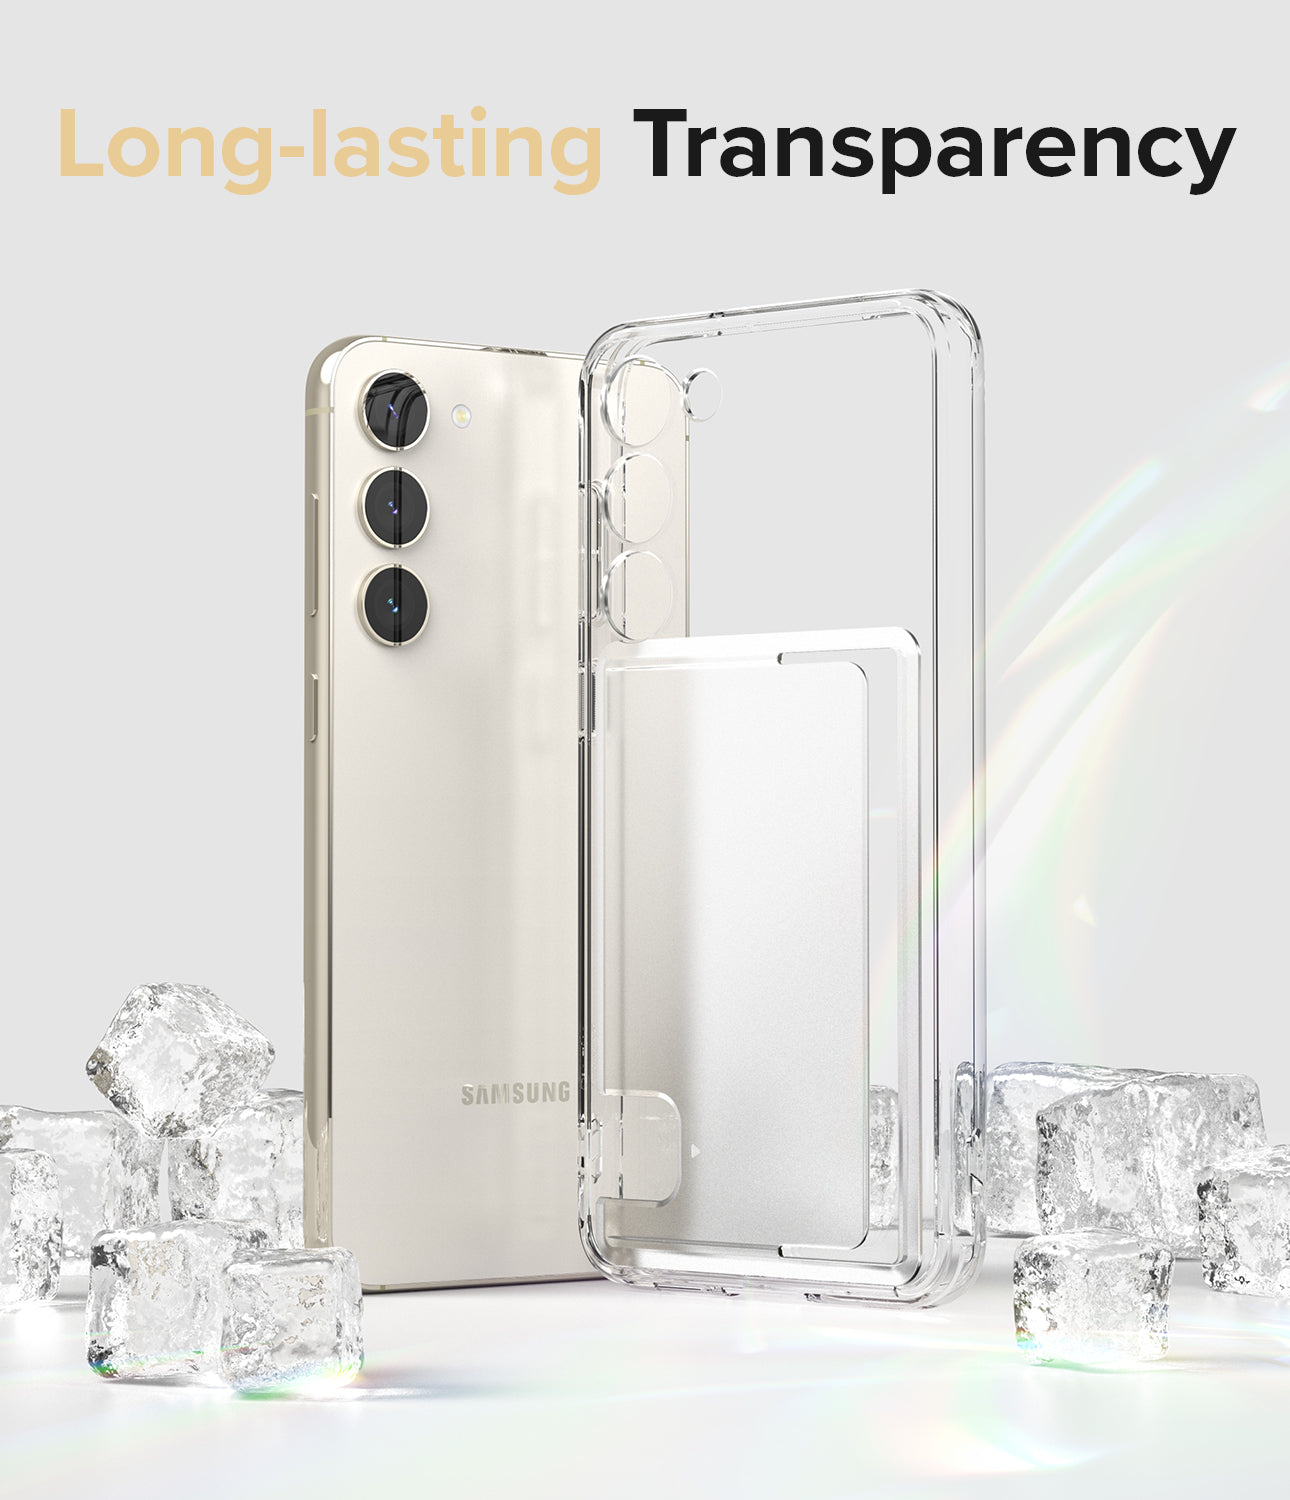 Long-lasting Transparency